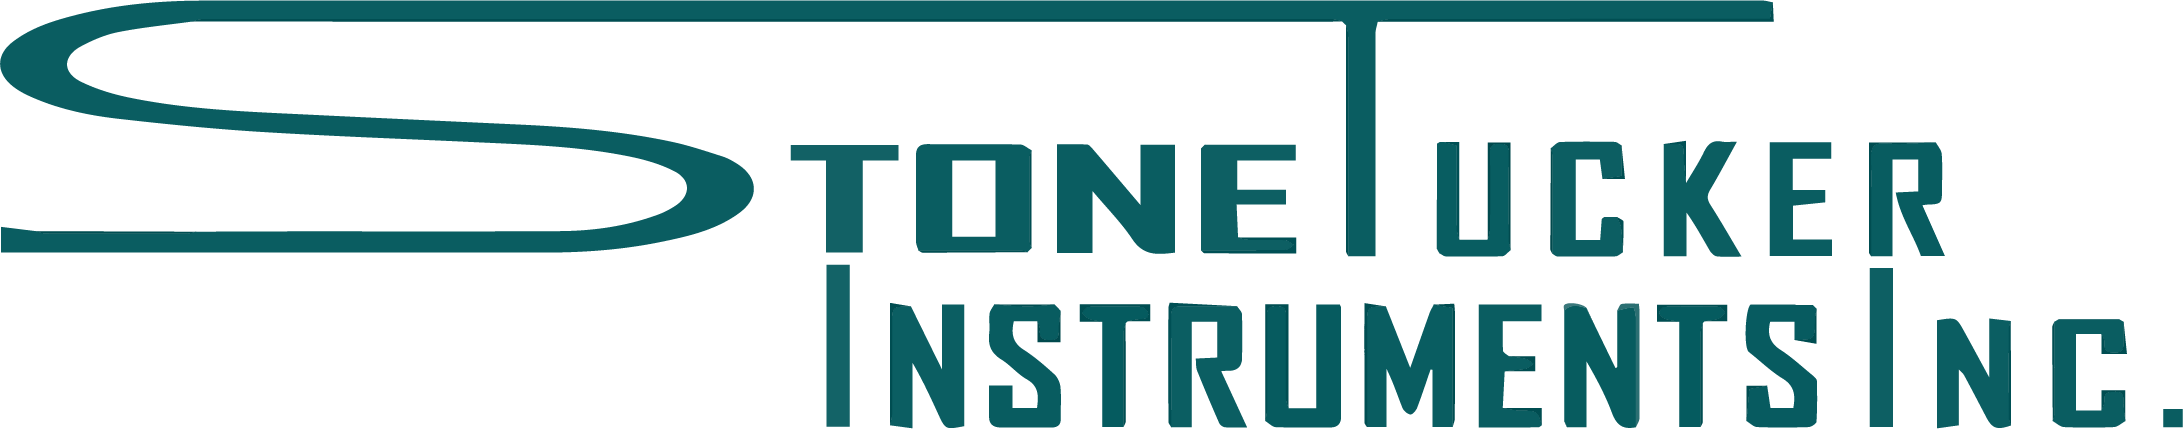 Stone Tucker Instruments Inc logo